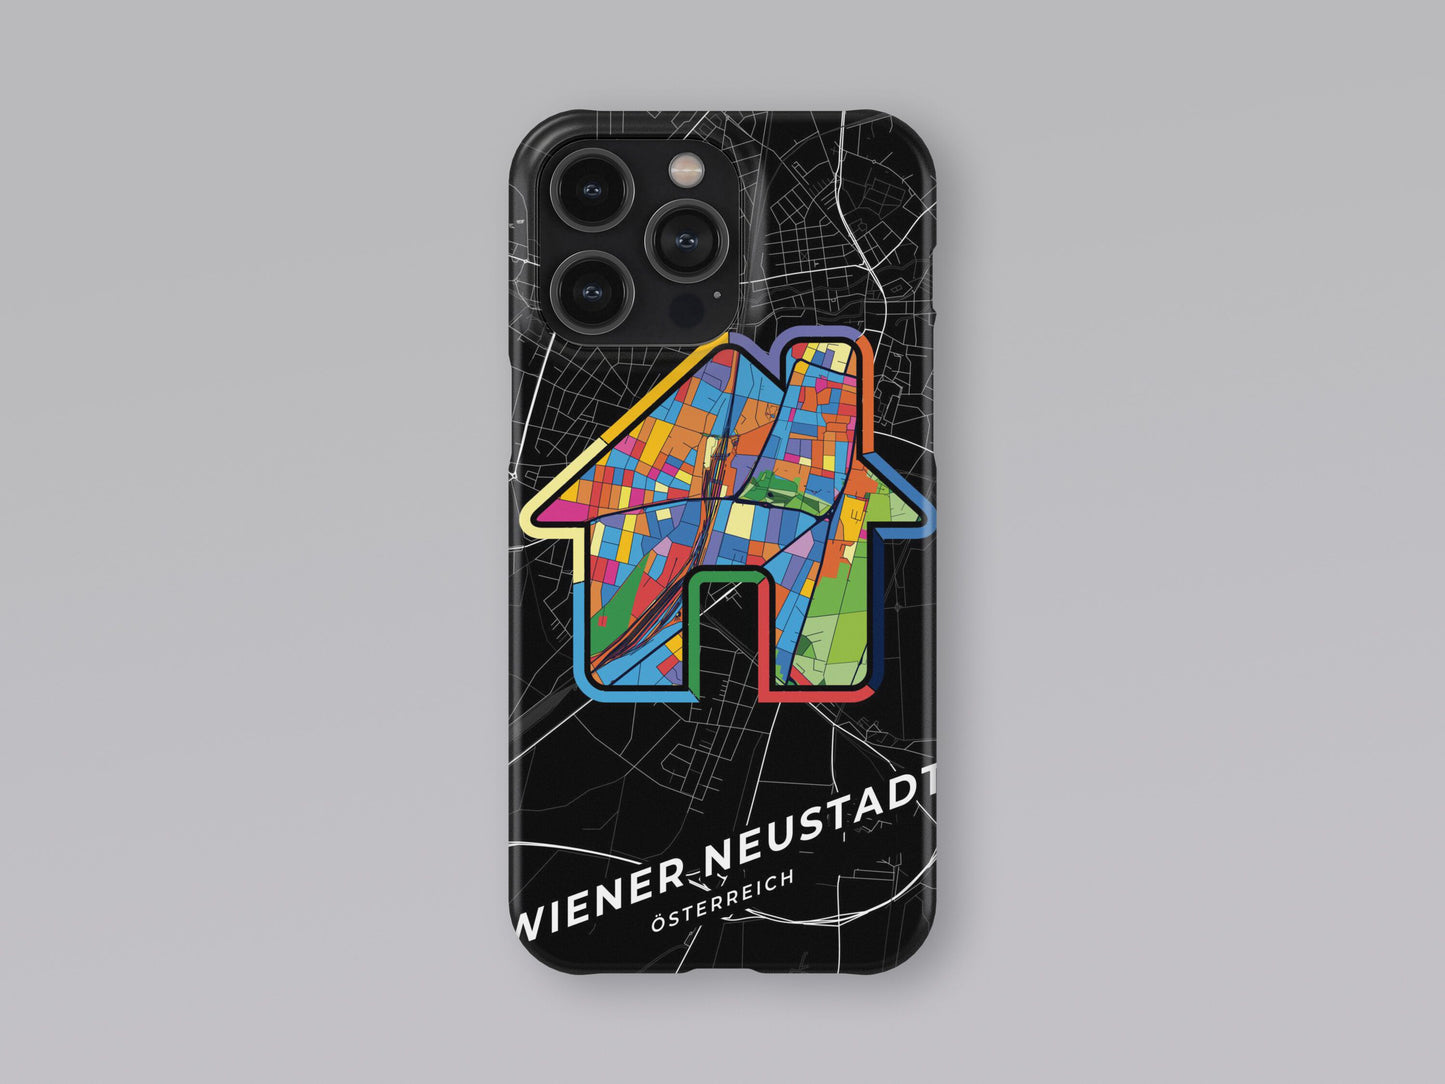 Wiener Neustadt Österreich slim phone case with colorful icon. Birthday, wedding or housewarming gift. Couple match cases. 3